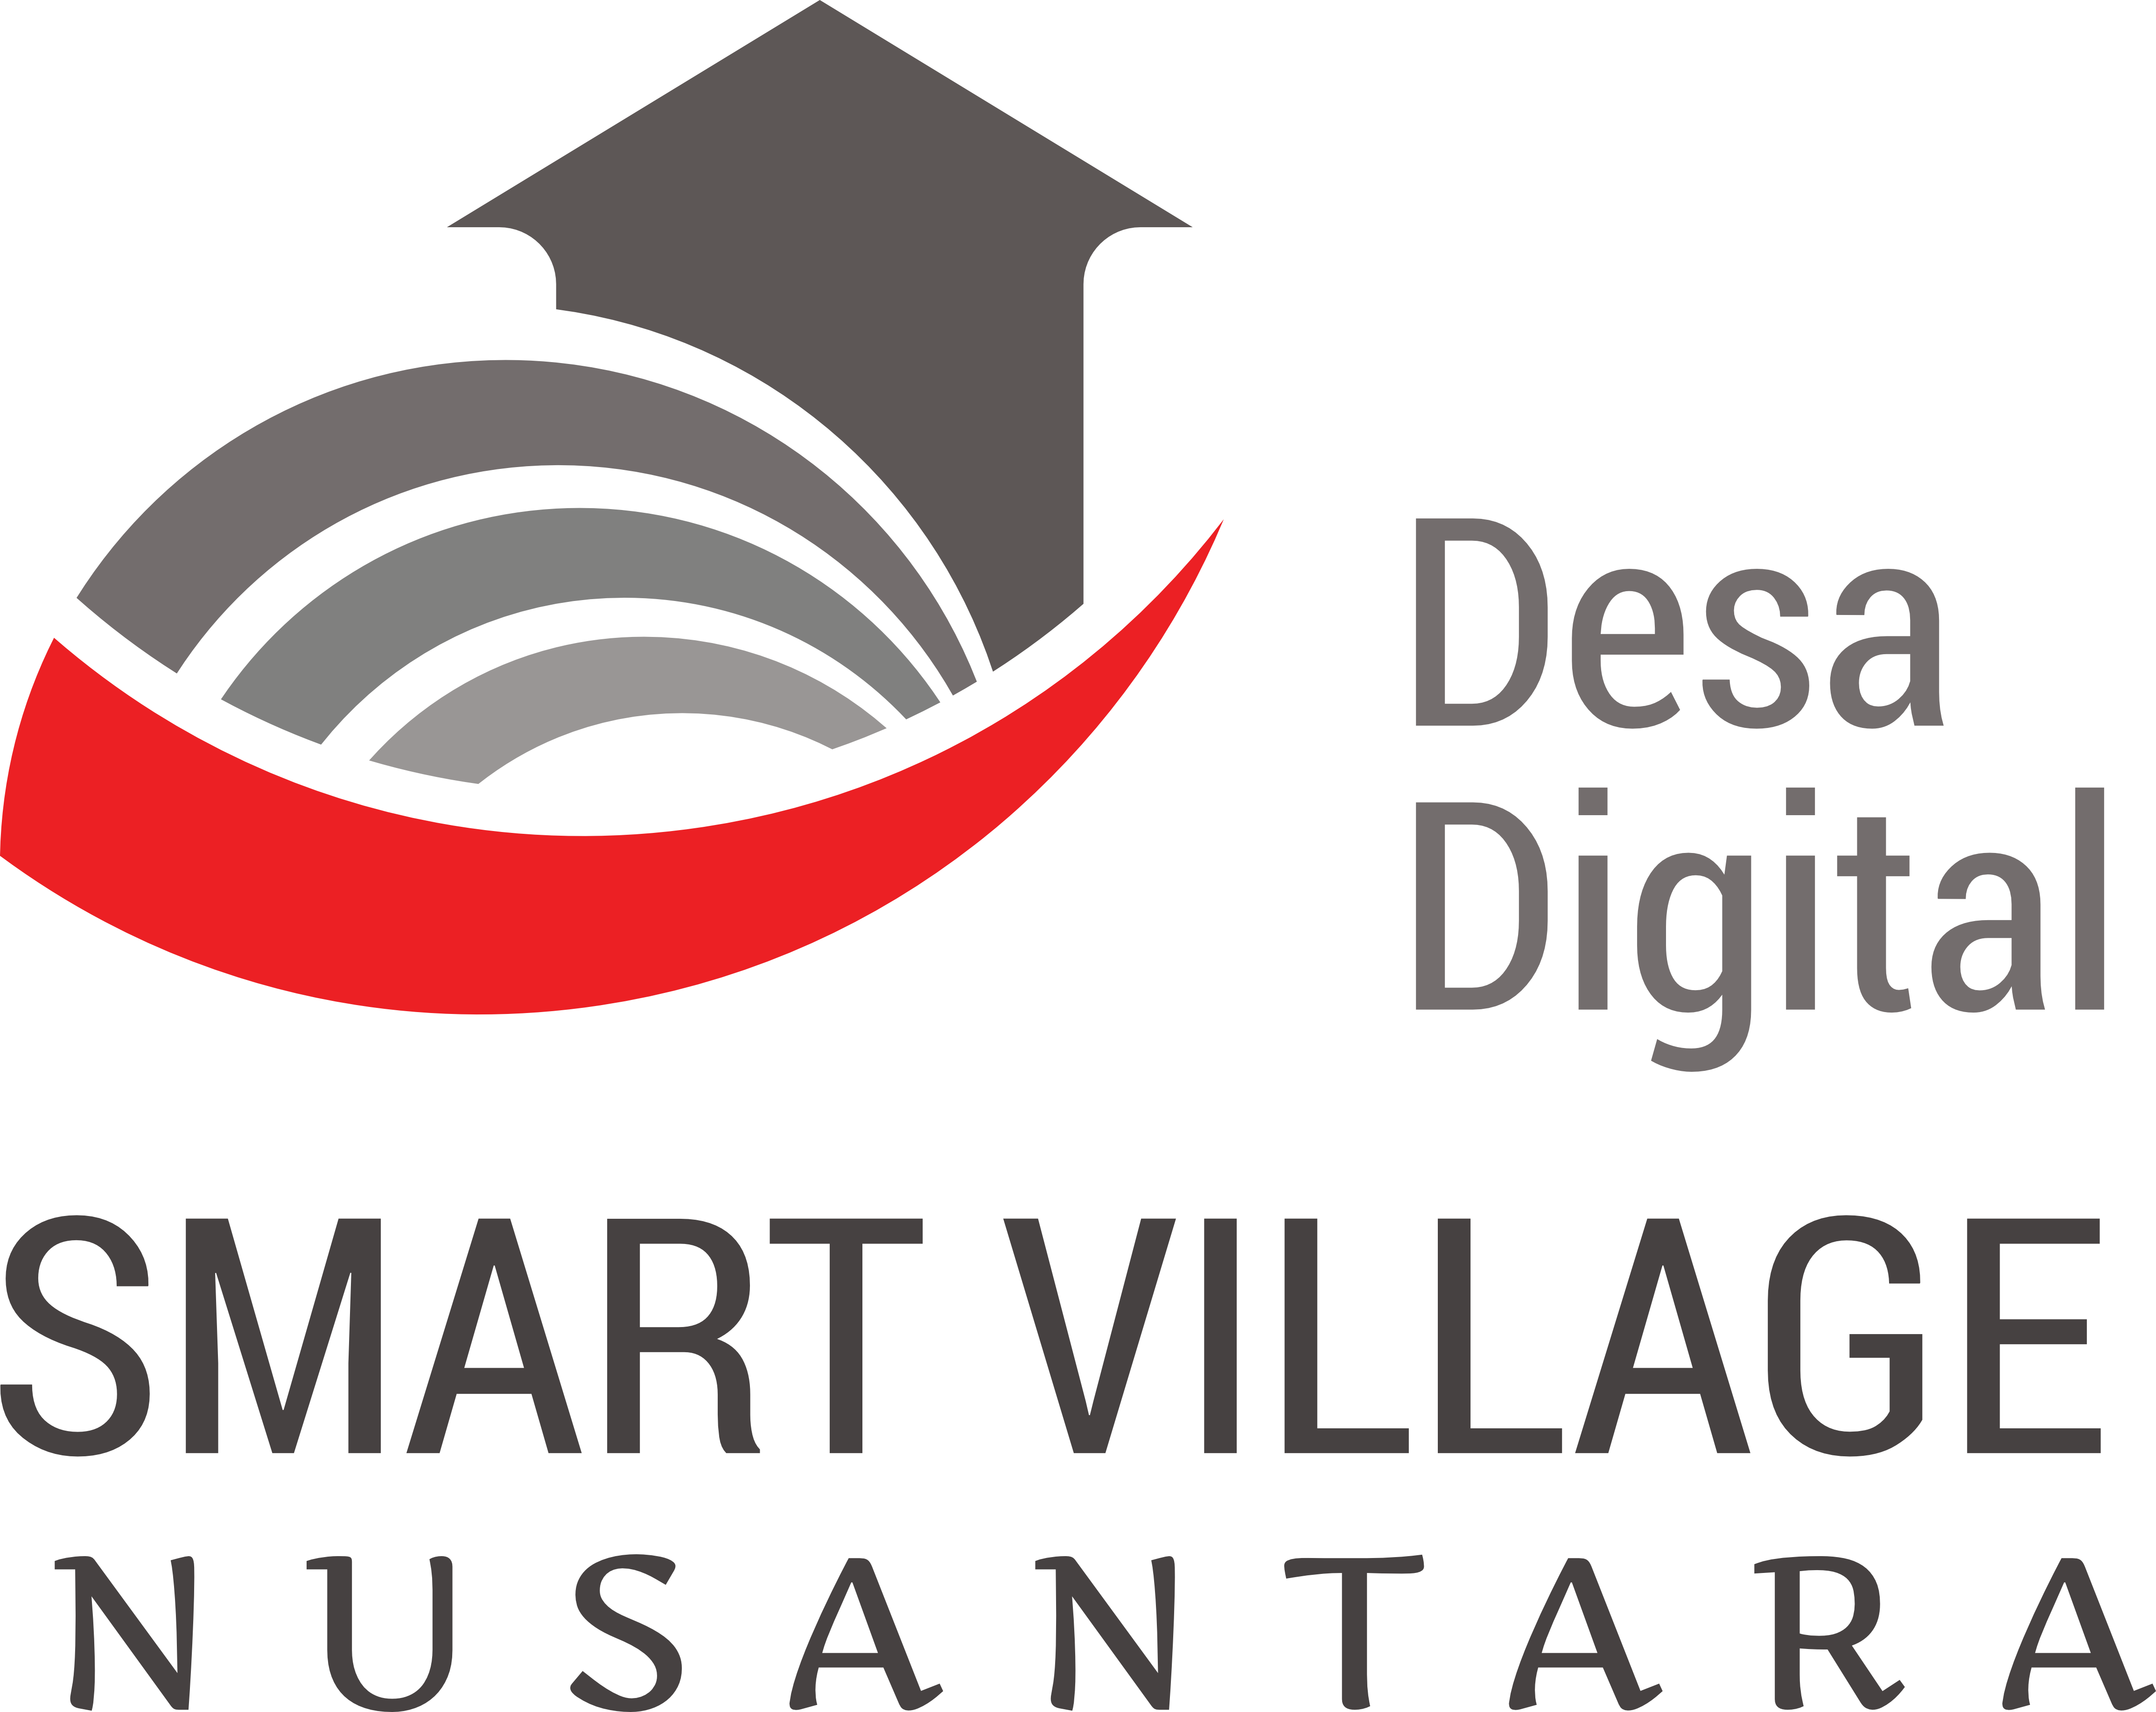 Ekosistem Digitalisasi Desa bersama Smart Village Nusantara Telkom Indonesia￼